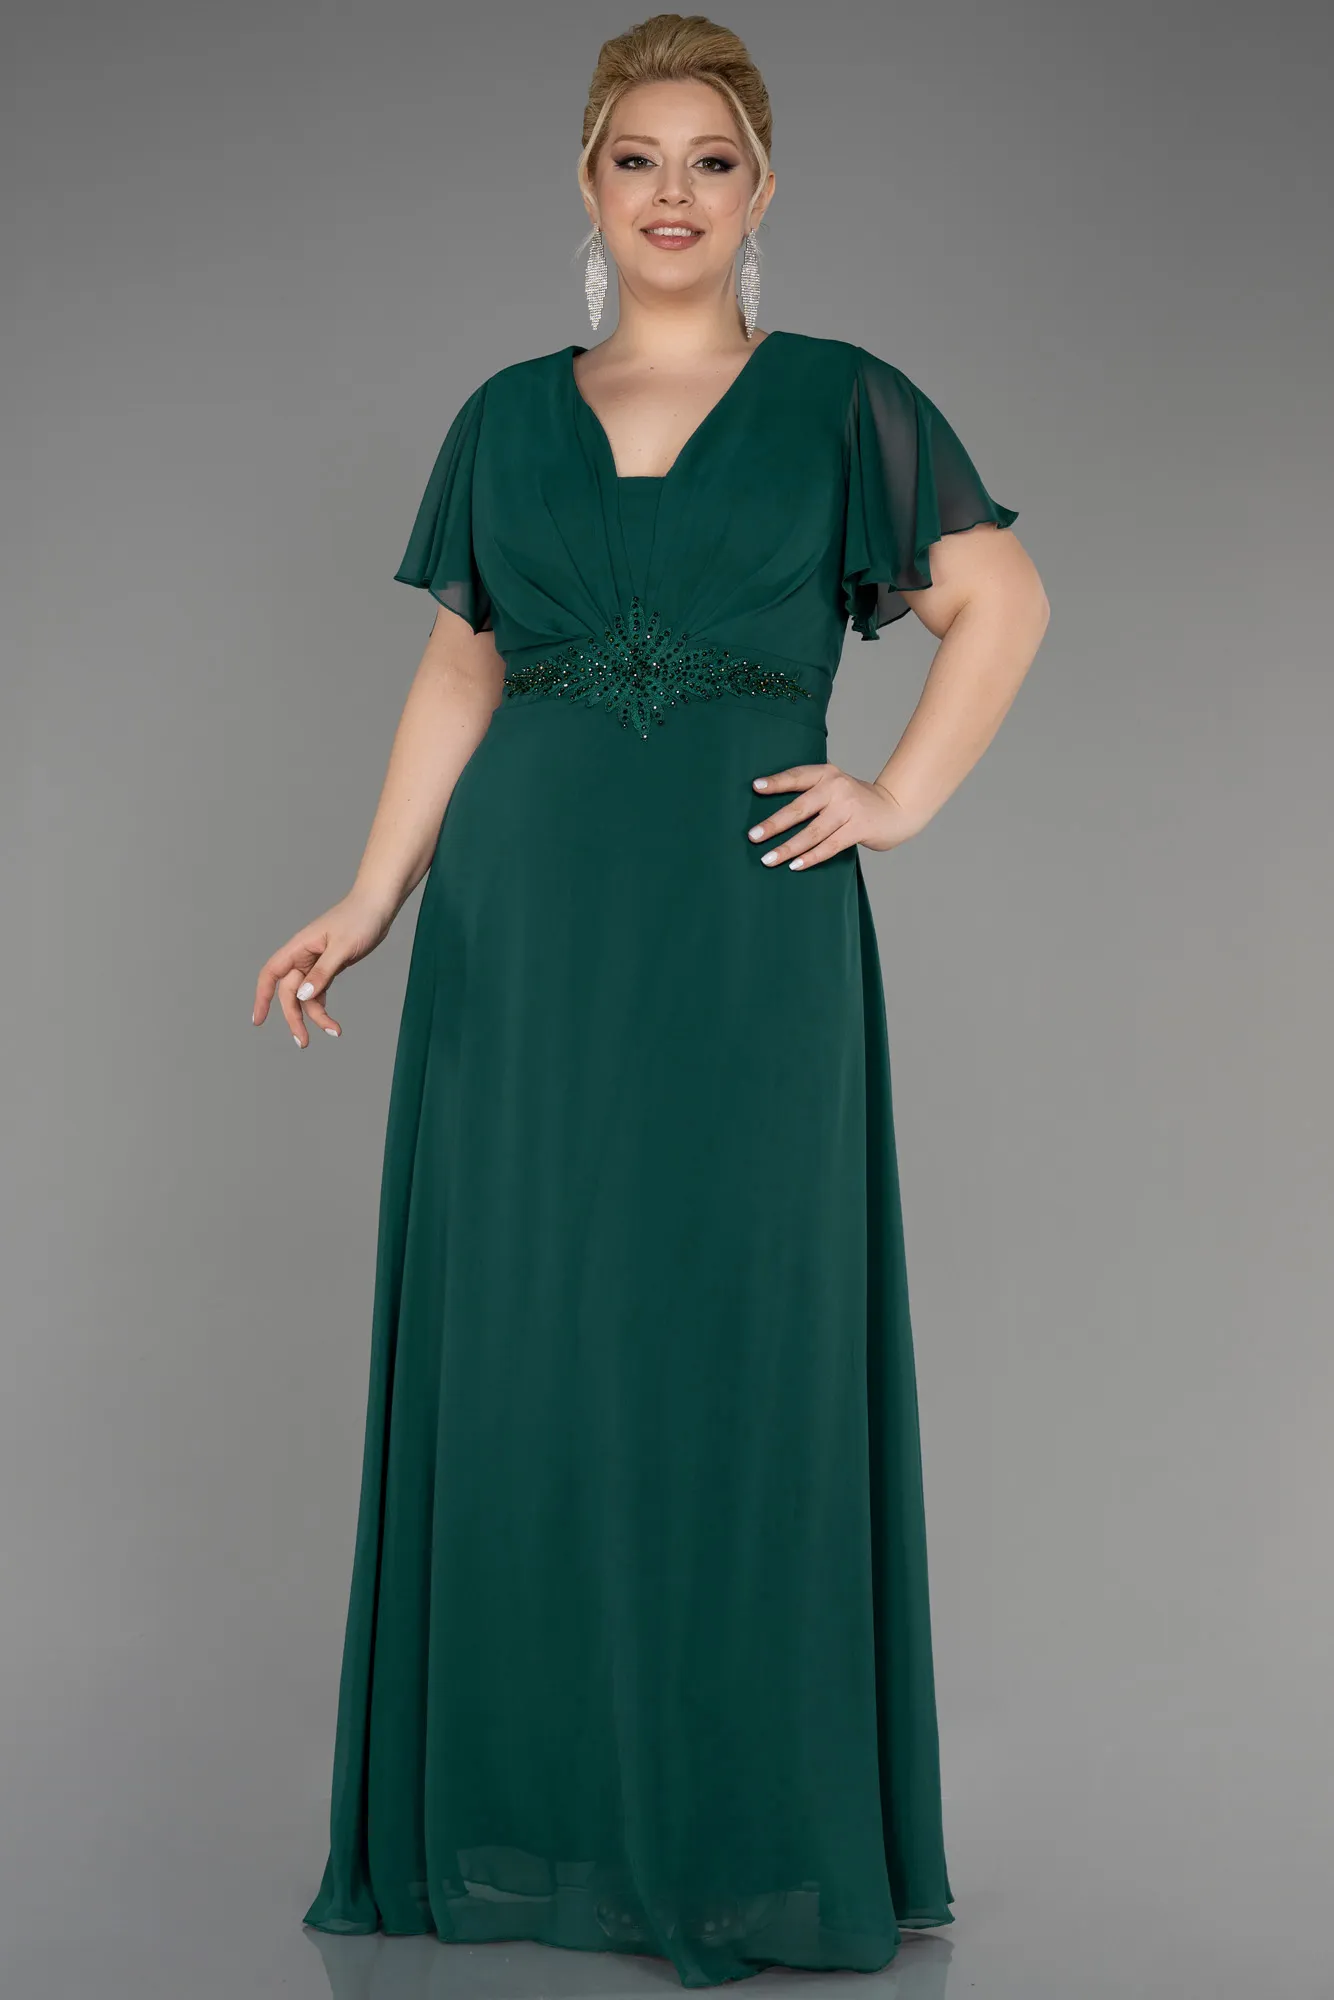 Oil Green-Long Chiffon Plus Size Evening Dress ABU2308